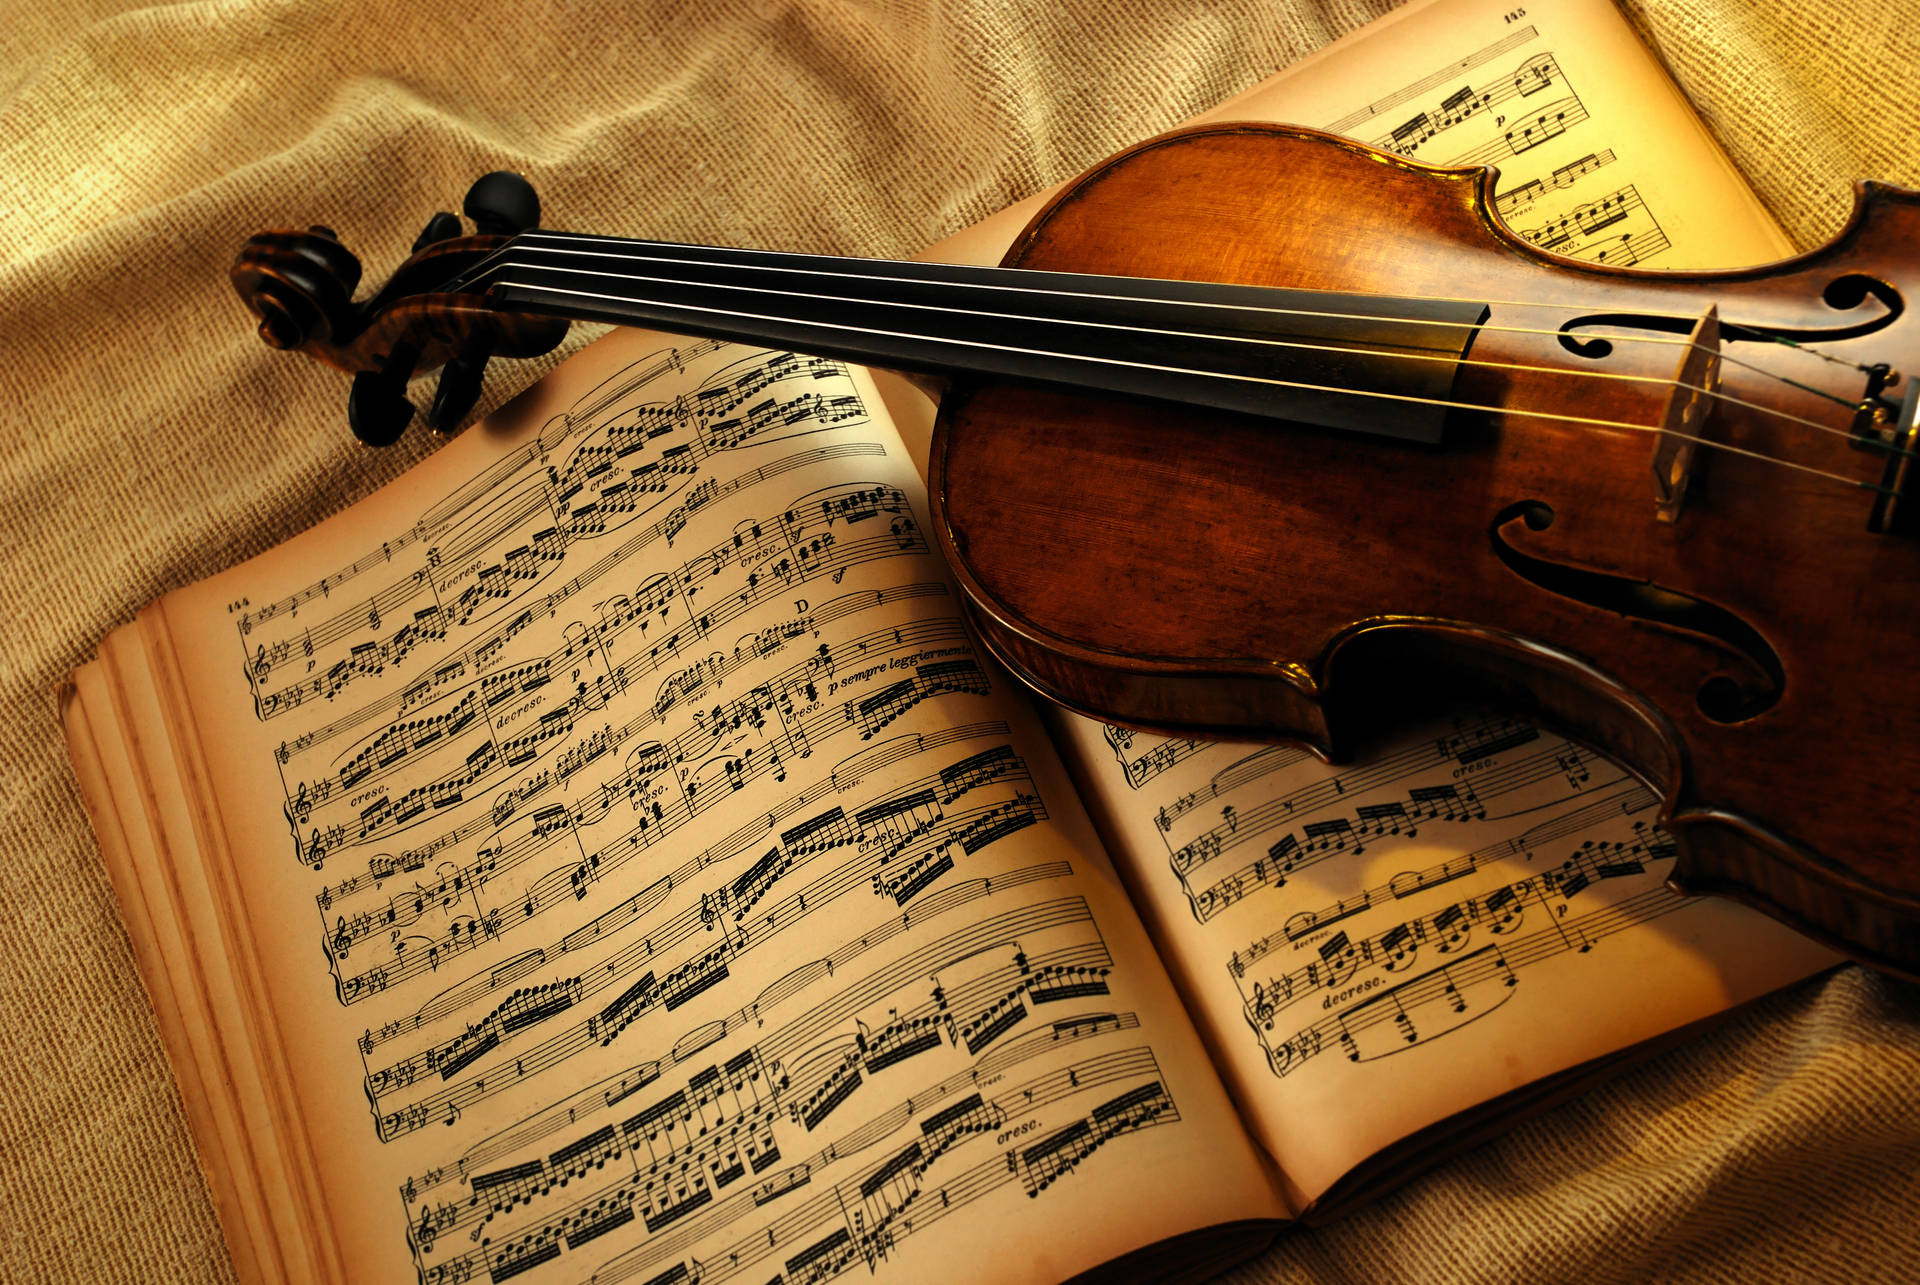 Classical Violin Music